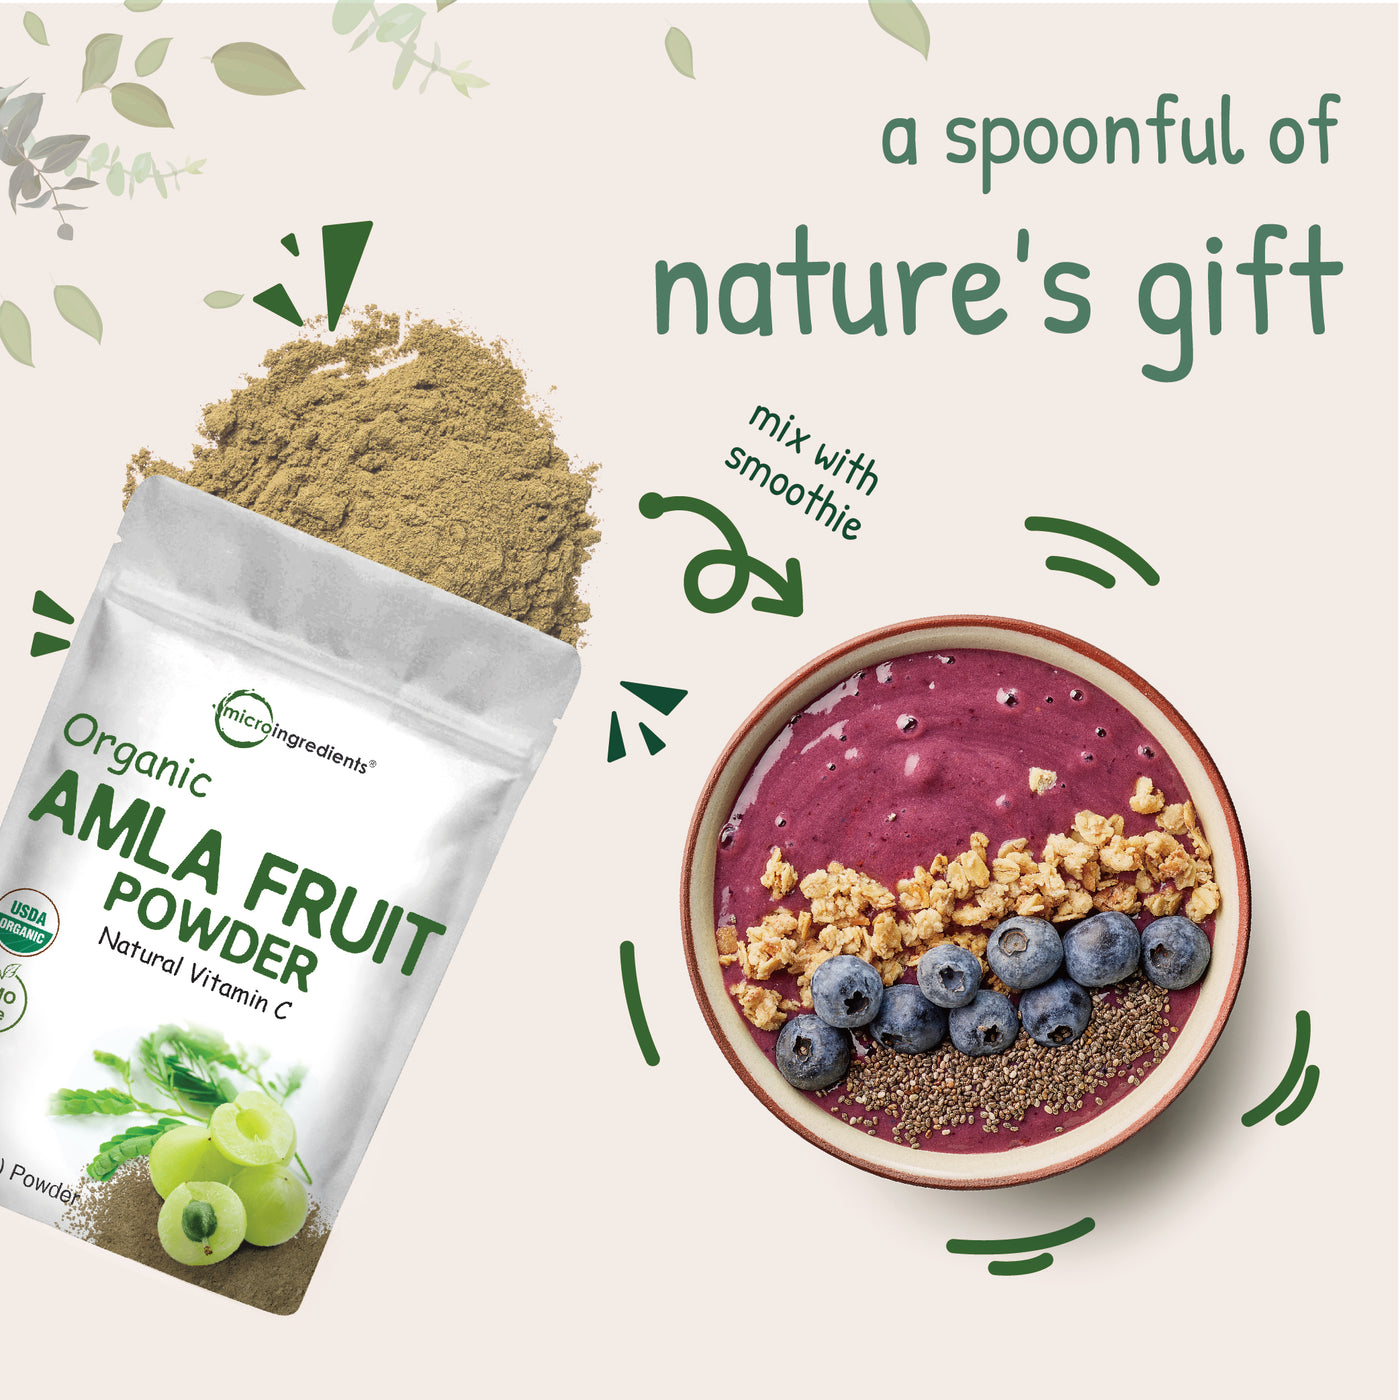 Organic Amla Powder, 32 Ounce Nature's Gift